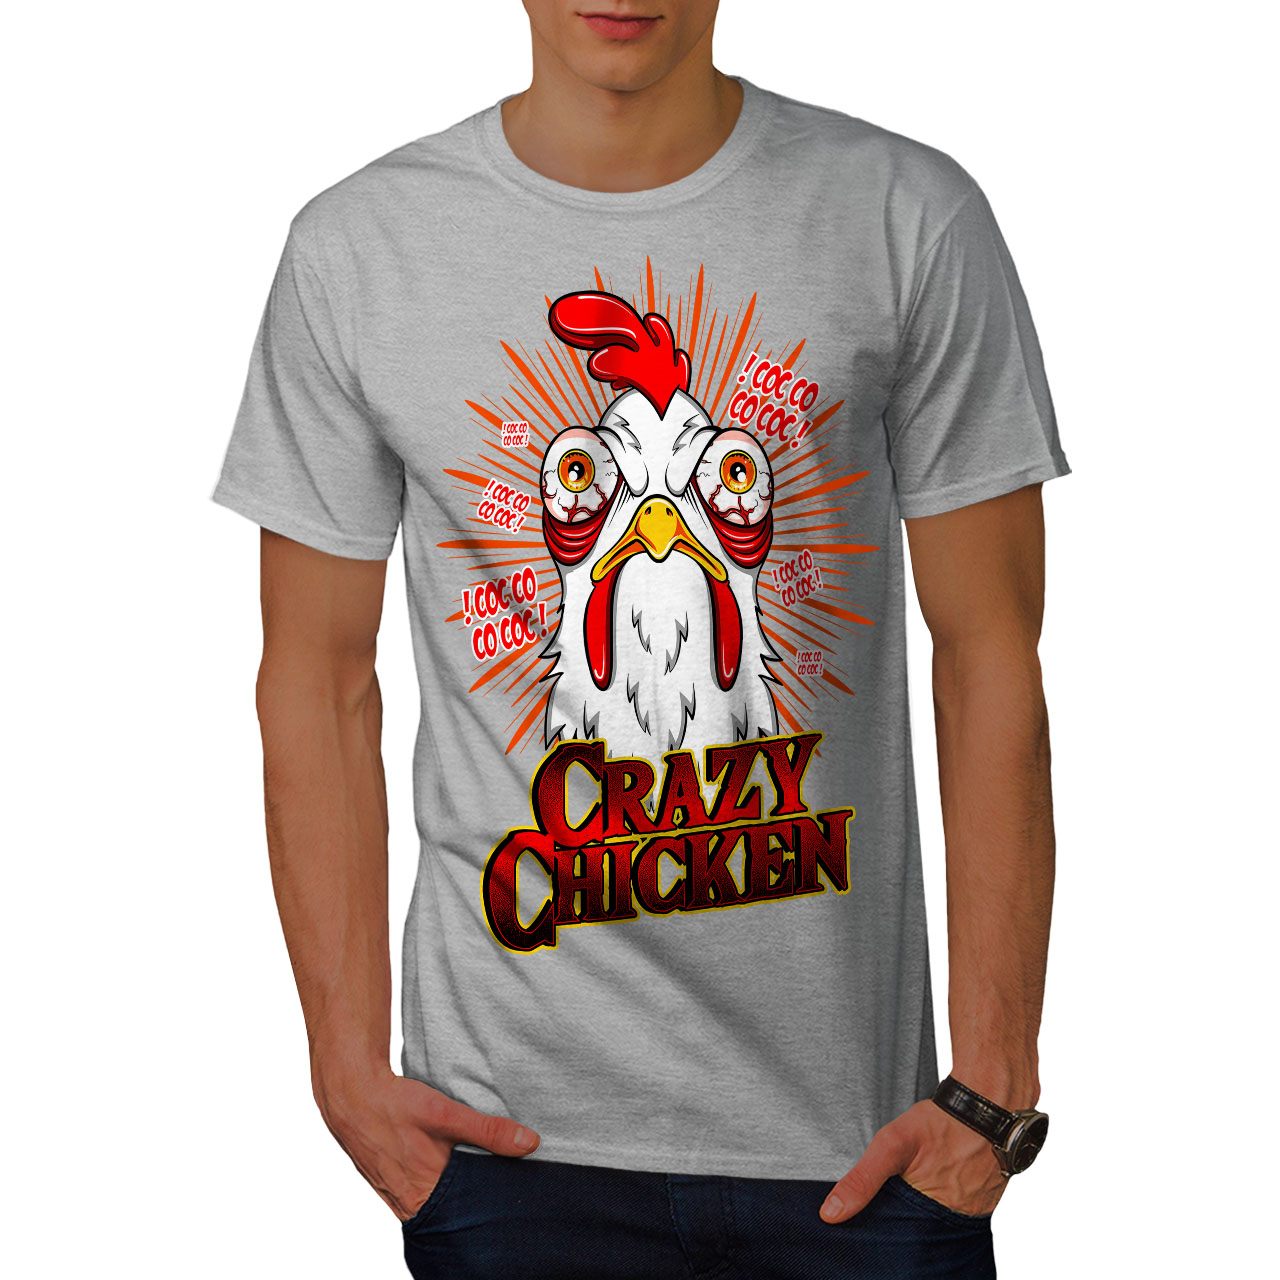 Buy > chicken t shirt mens > in stock